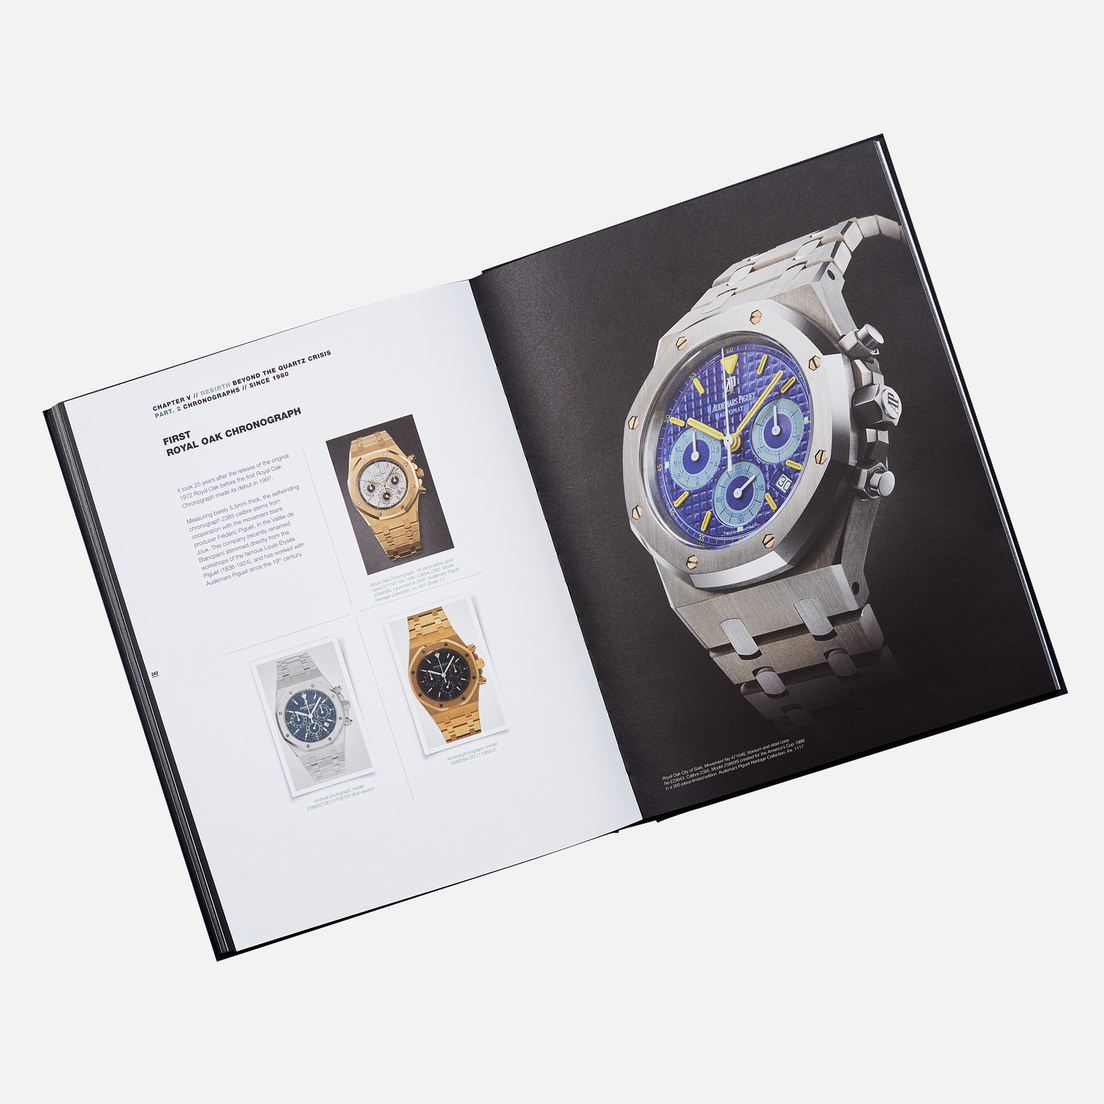 Watchprint Книга Audemars Piguet 20th Century Complicated Wristwatches